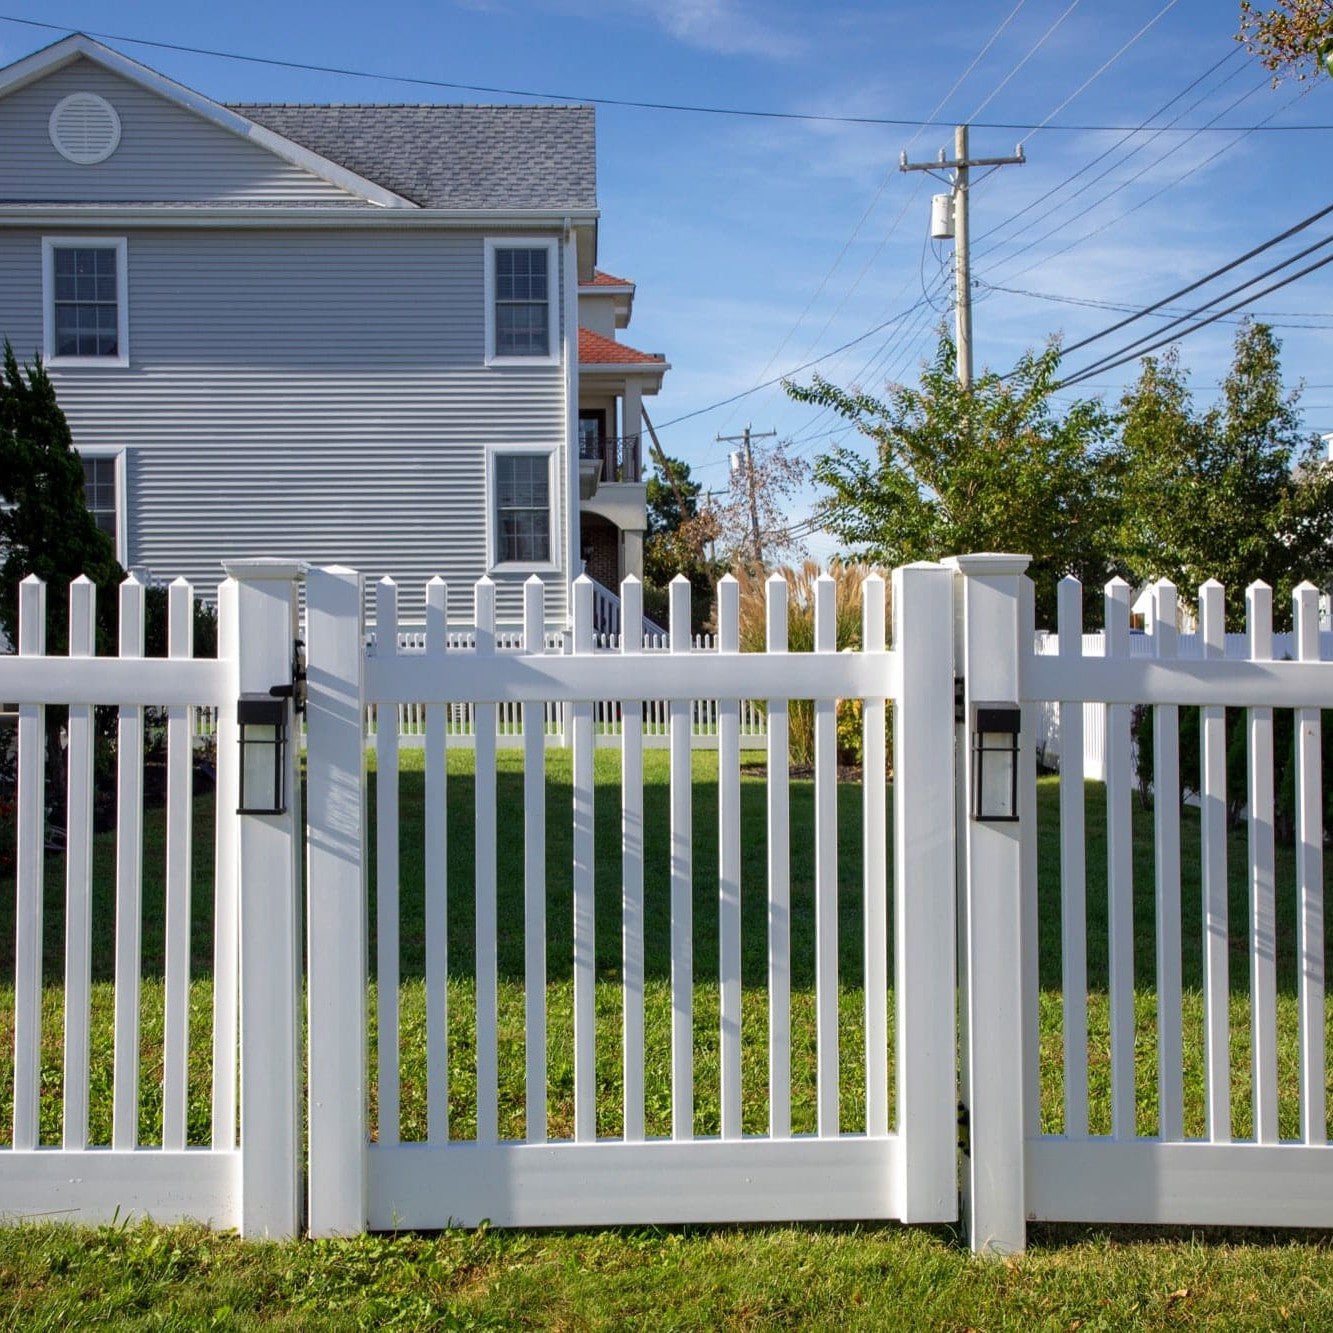 Chestnut Haven Series - Fence Panel - 4' x 8'-Vinyl Fence Panels-ActiveYards-White-FenceCenter